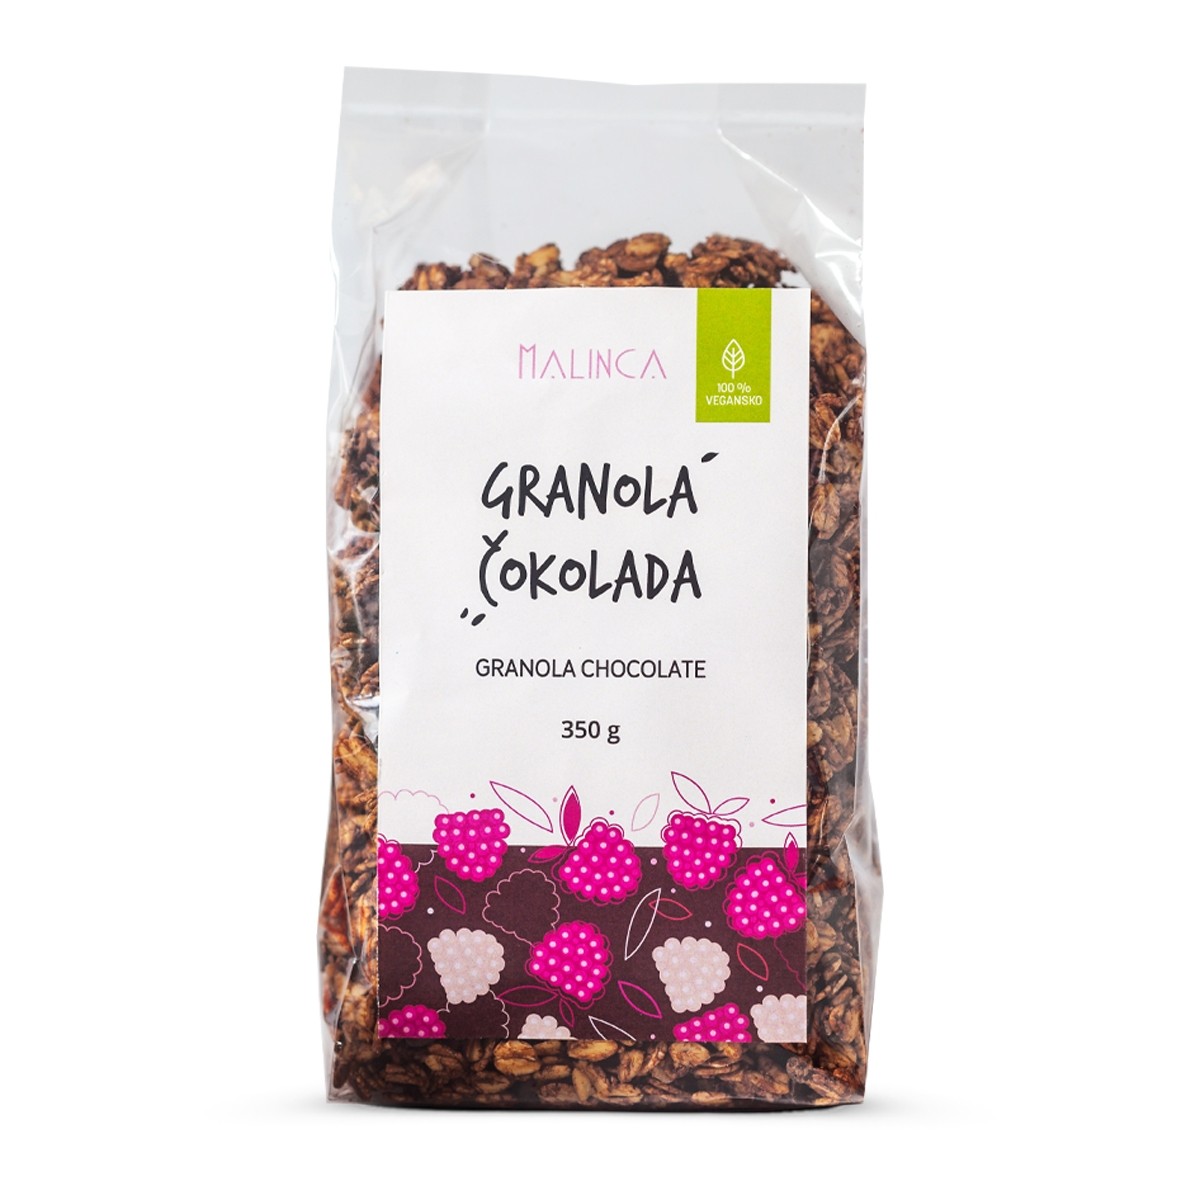 Homemade granola with chocolate 350g